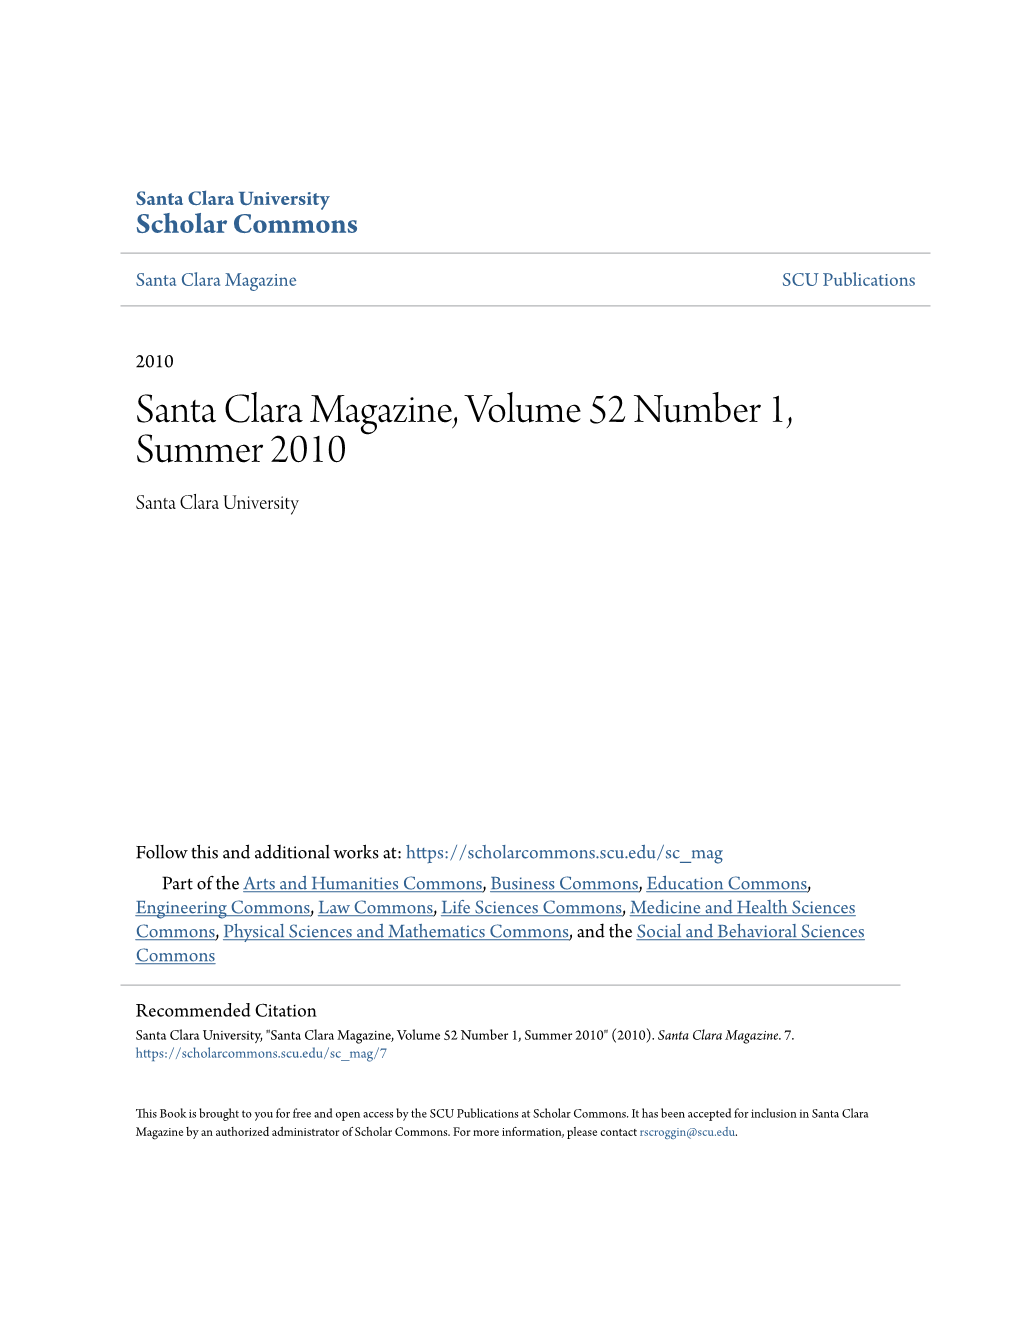 Santa Clara Magazine, Volume 52 Number 1, Summer 2010 Santa Clara University